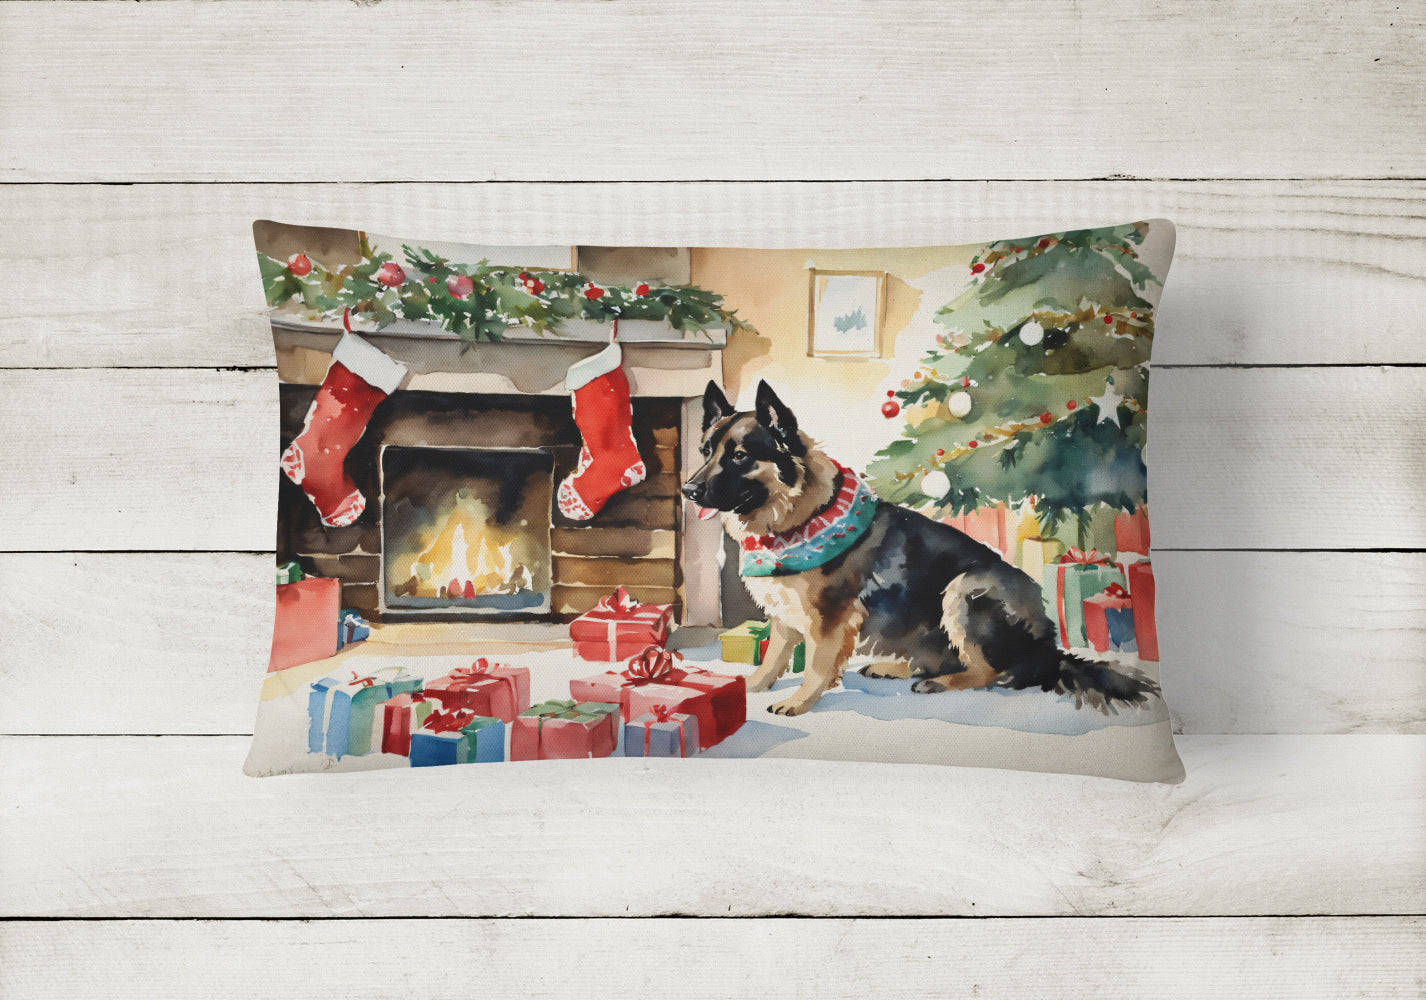 Buy this Norwegian Buhund Cozy Christmas Throw Pillow